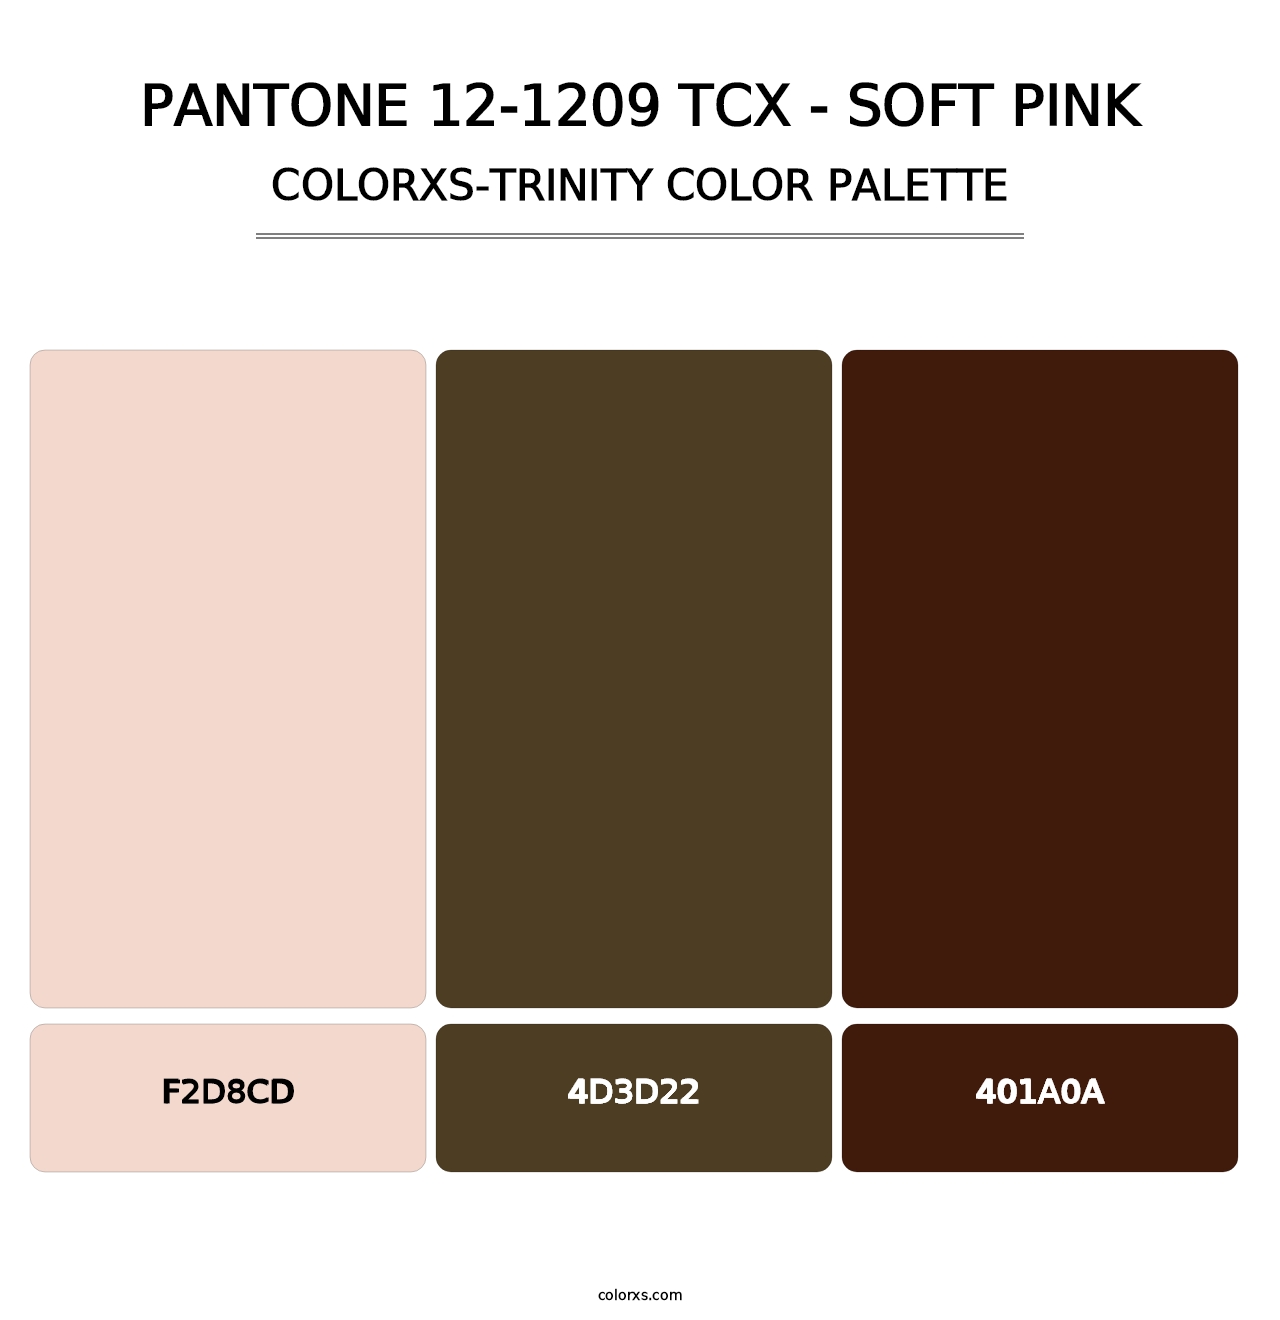 PANTONE 12-1209 TCX - Soft Pink - Colorxs Trinity Palette